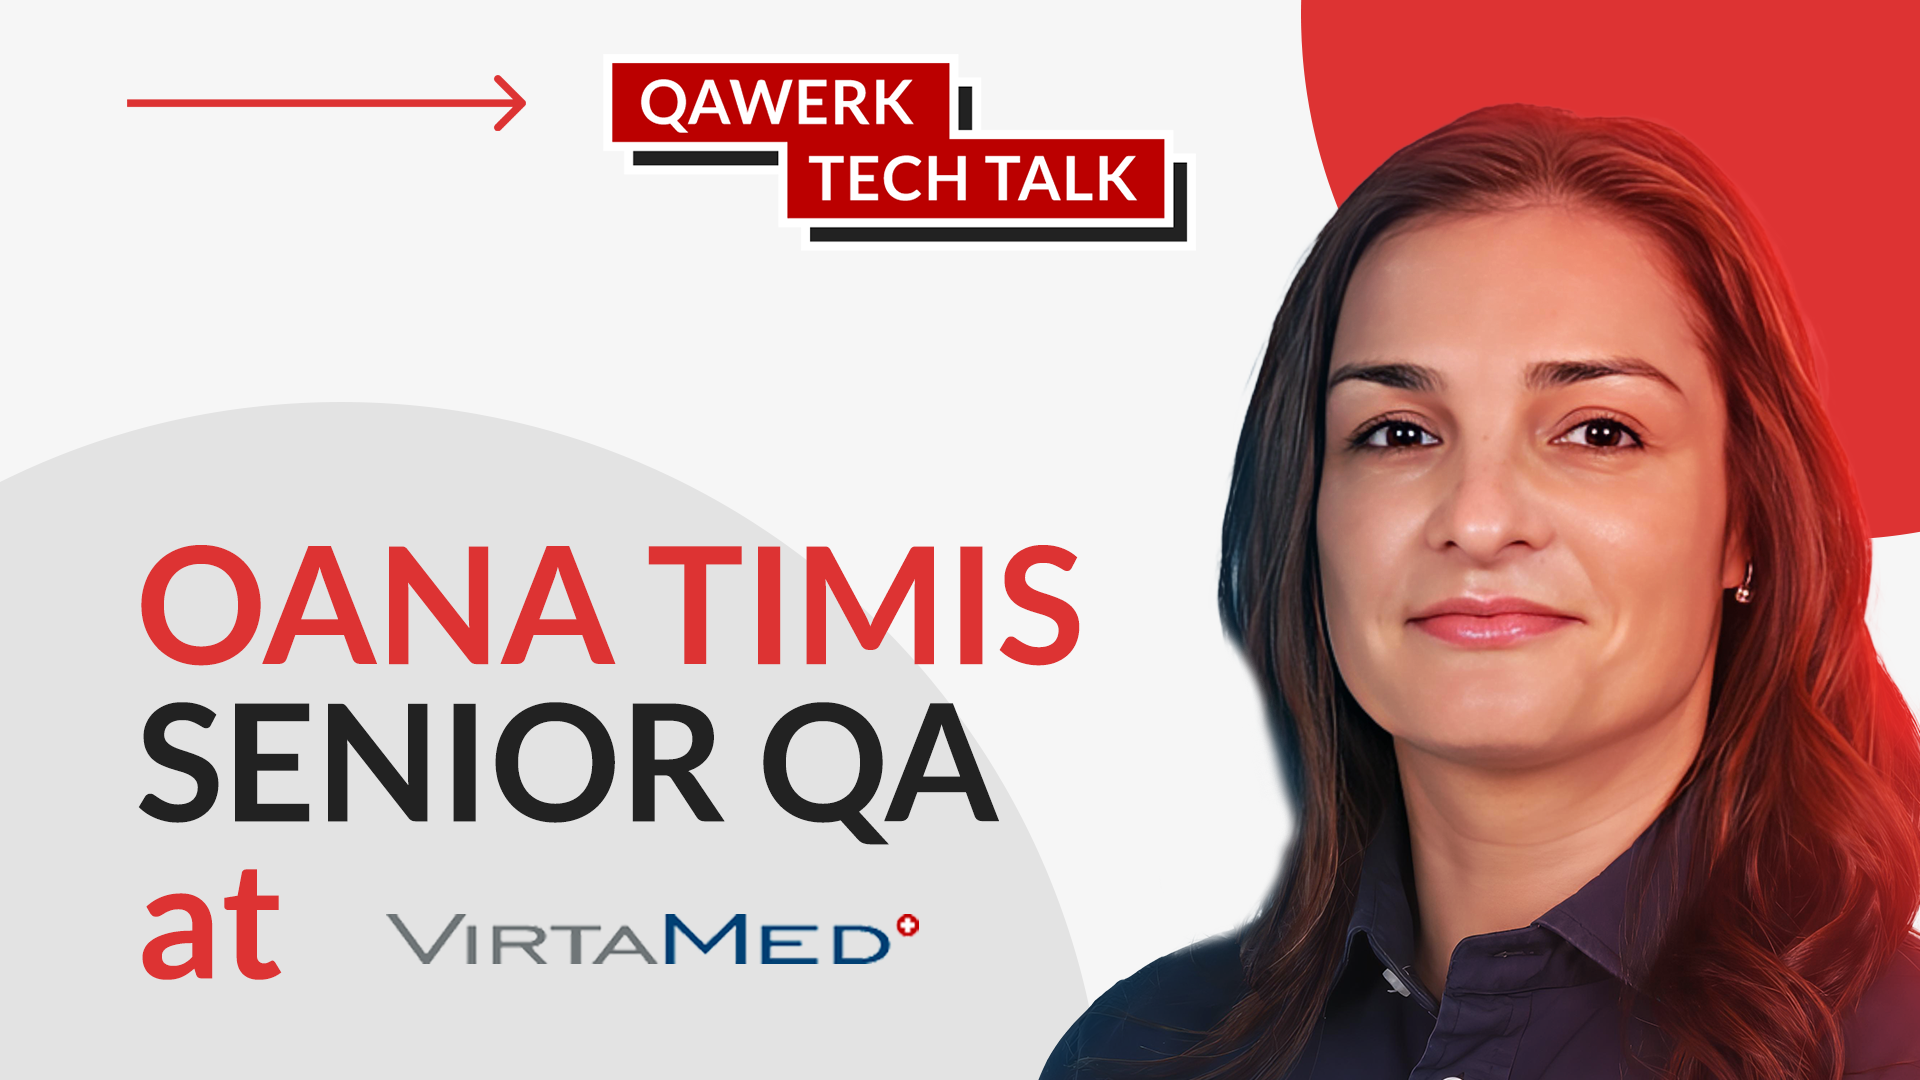 TechTalk with Oana Timis from VirtaMed